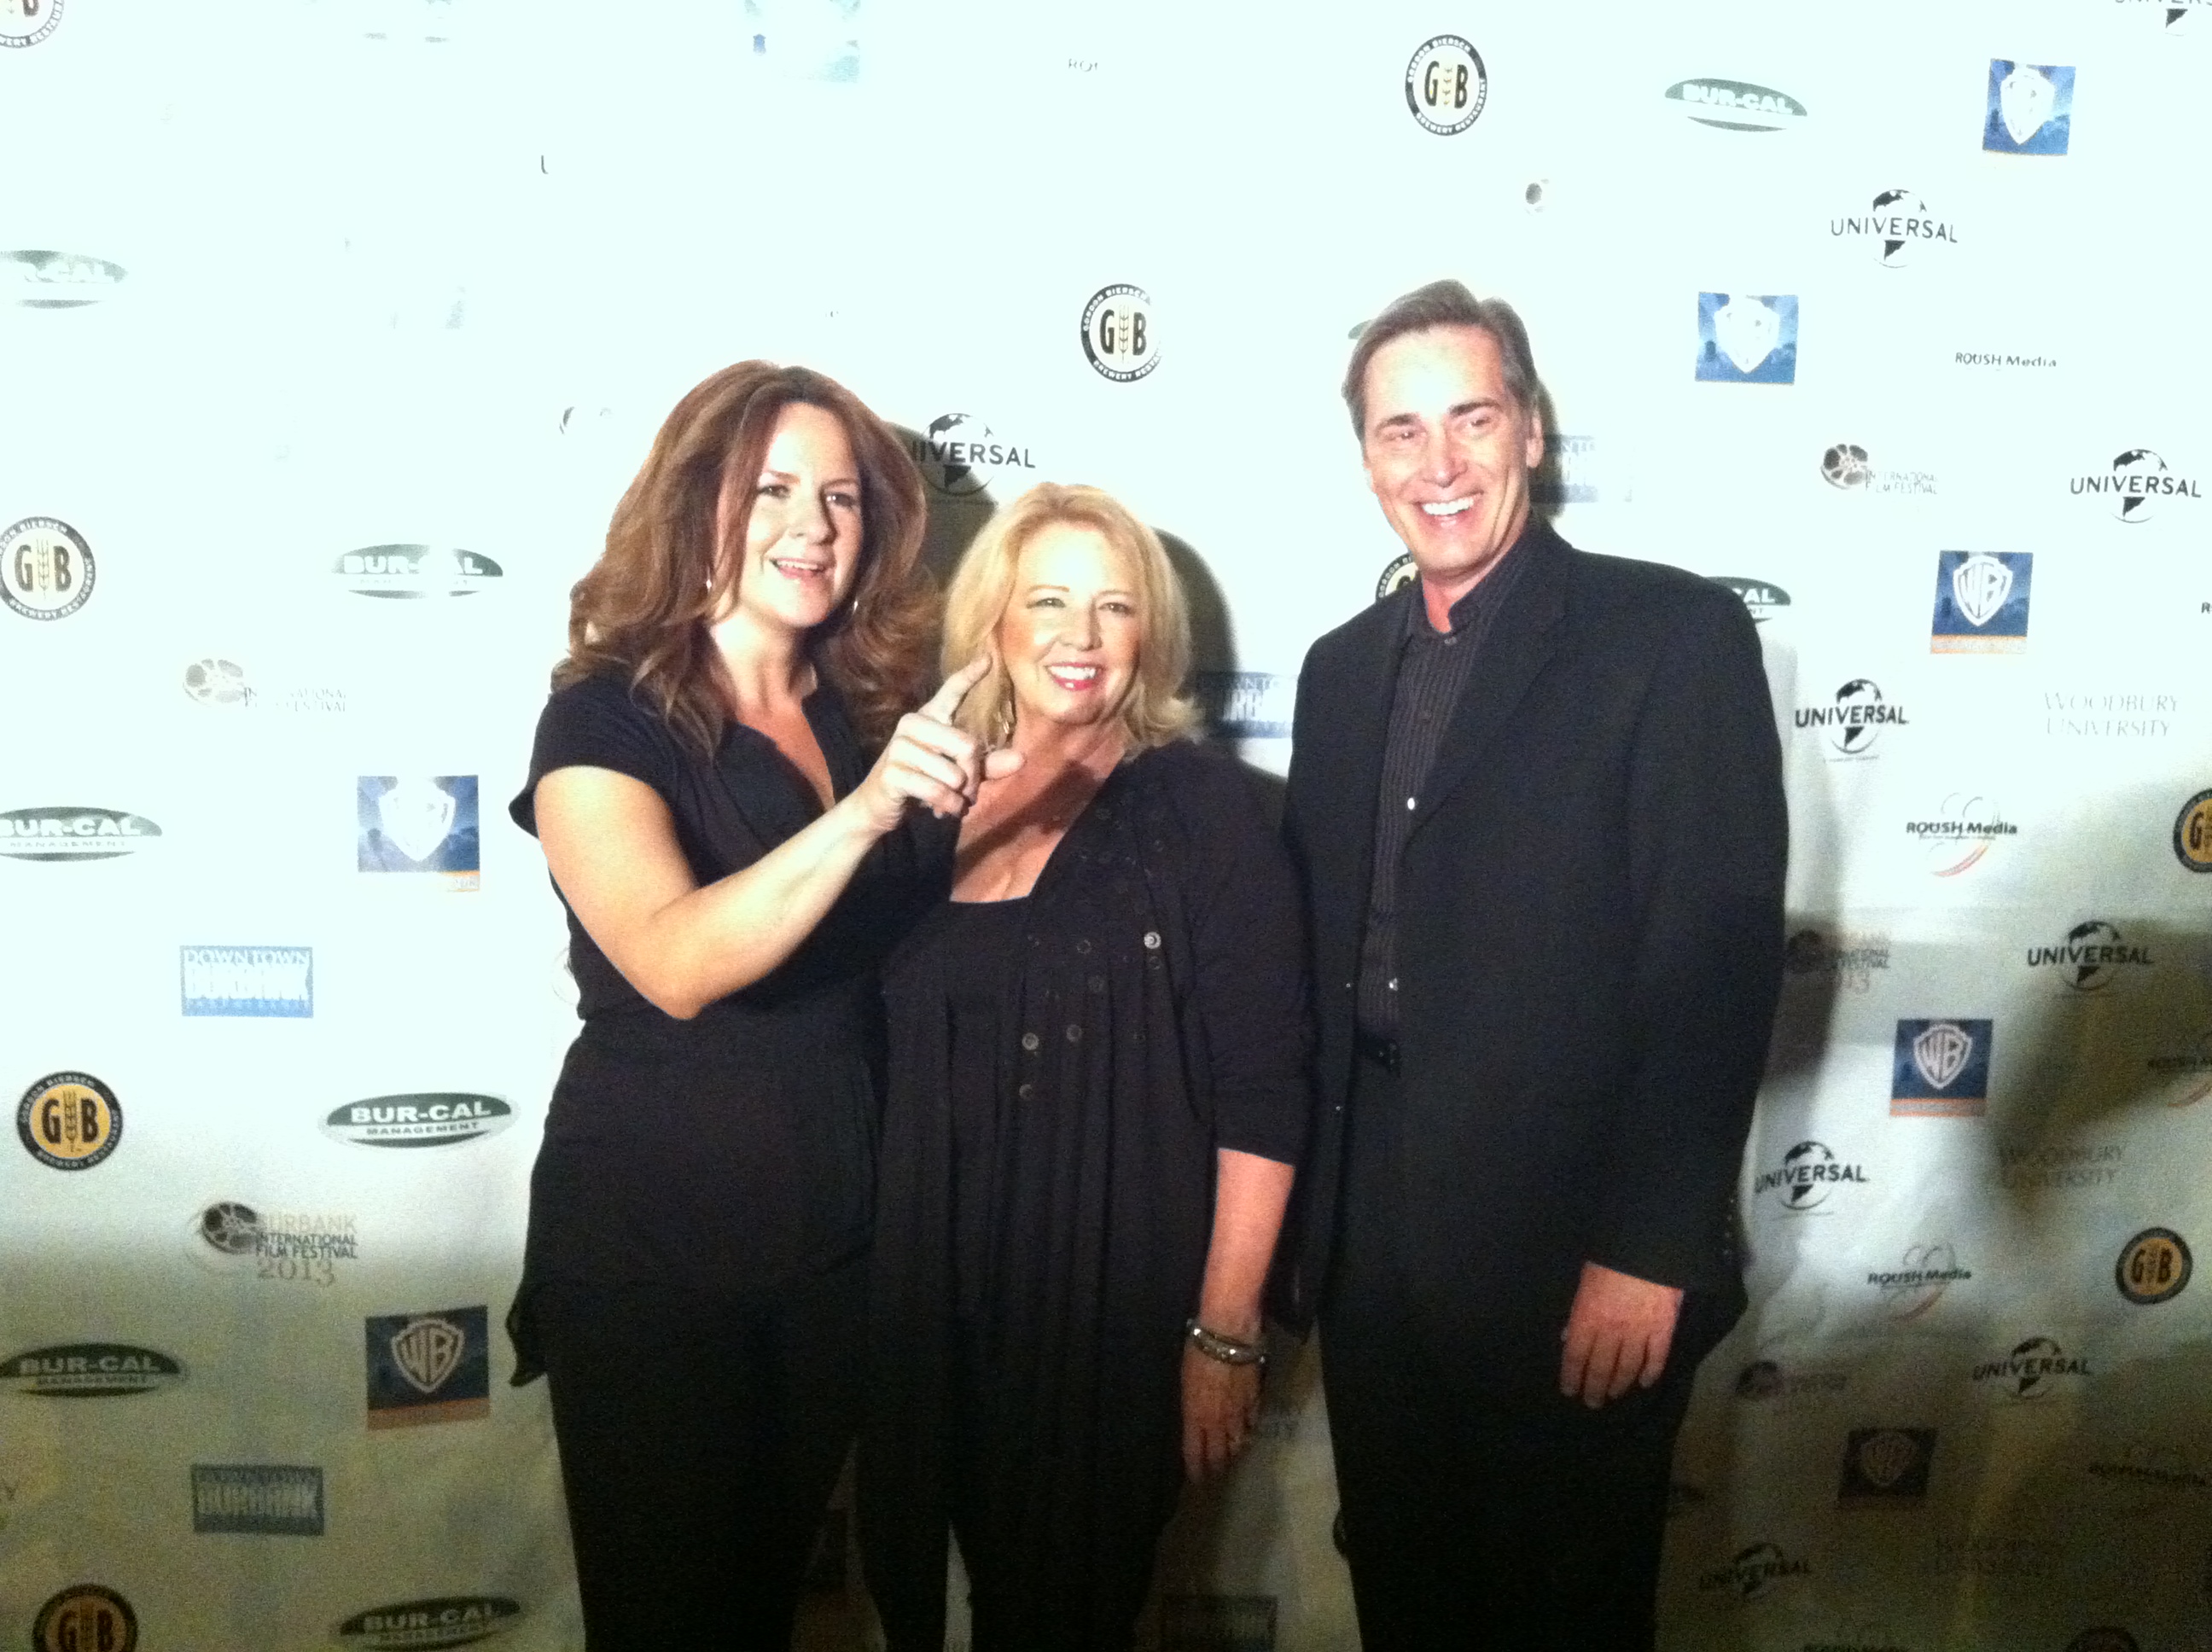 On the red carpet at the Burbank International Film Festival 2013